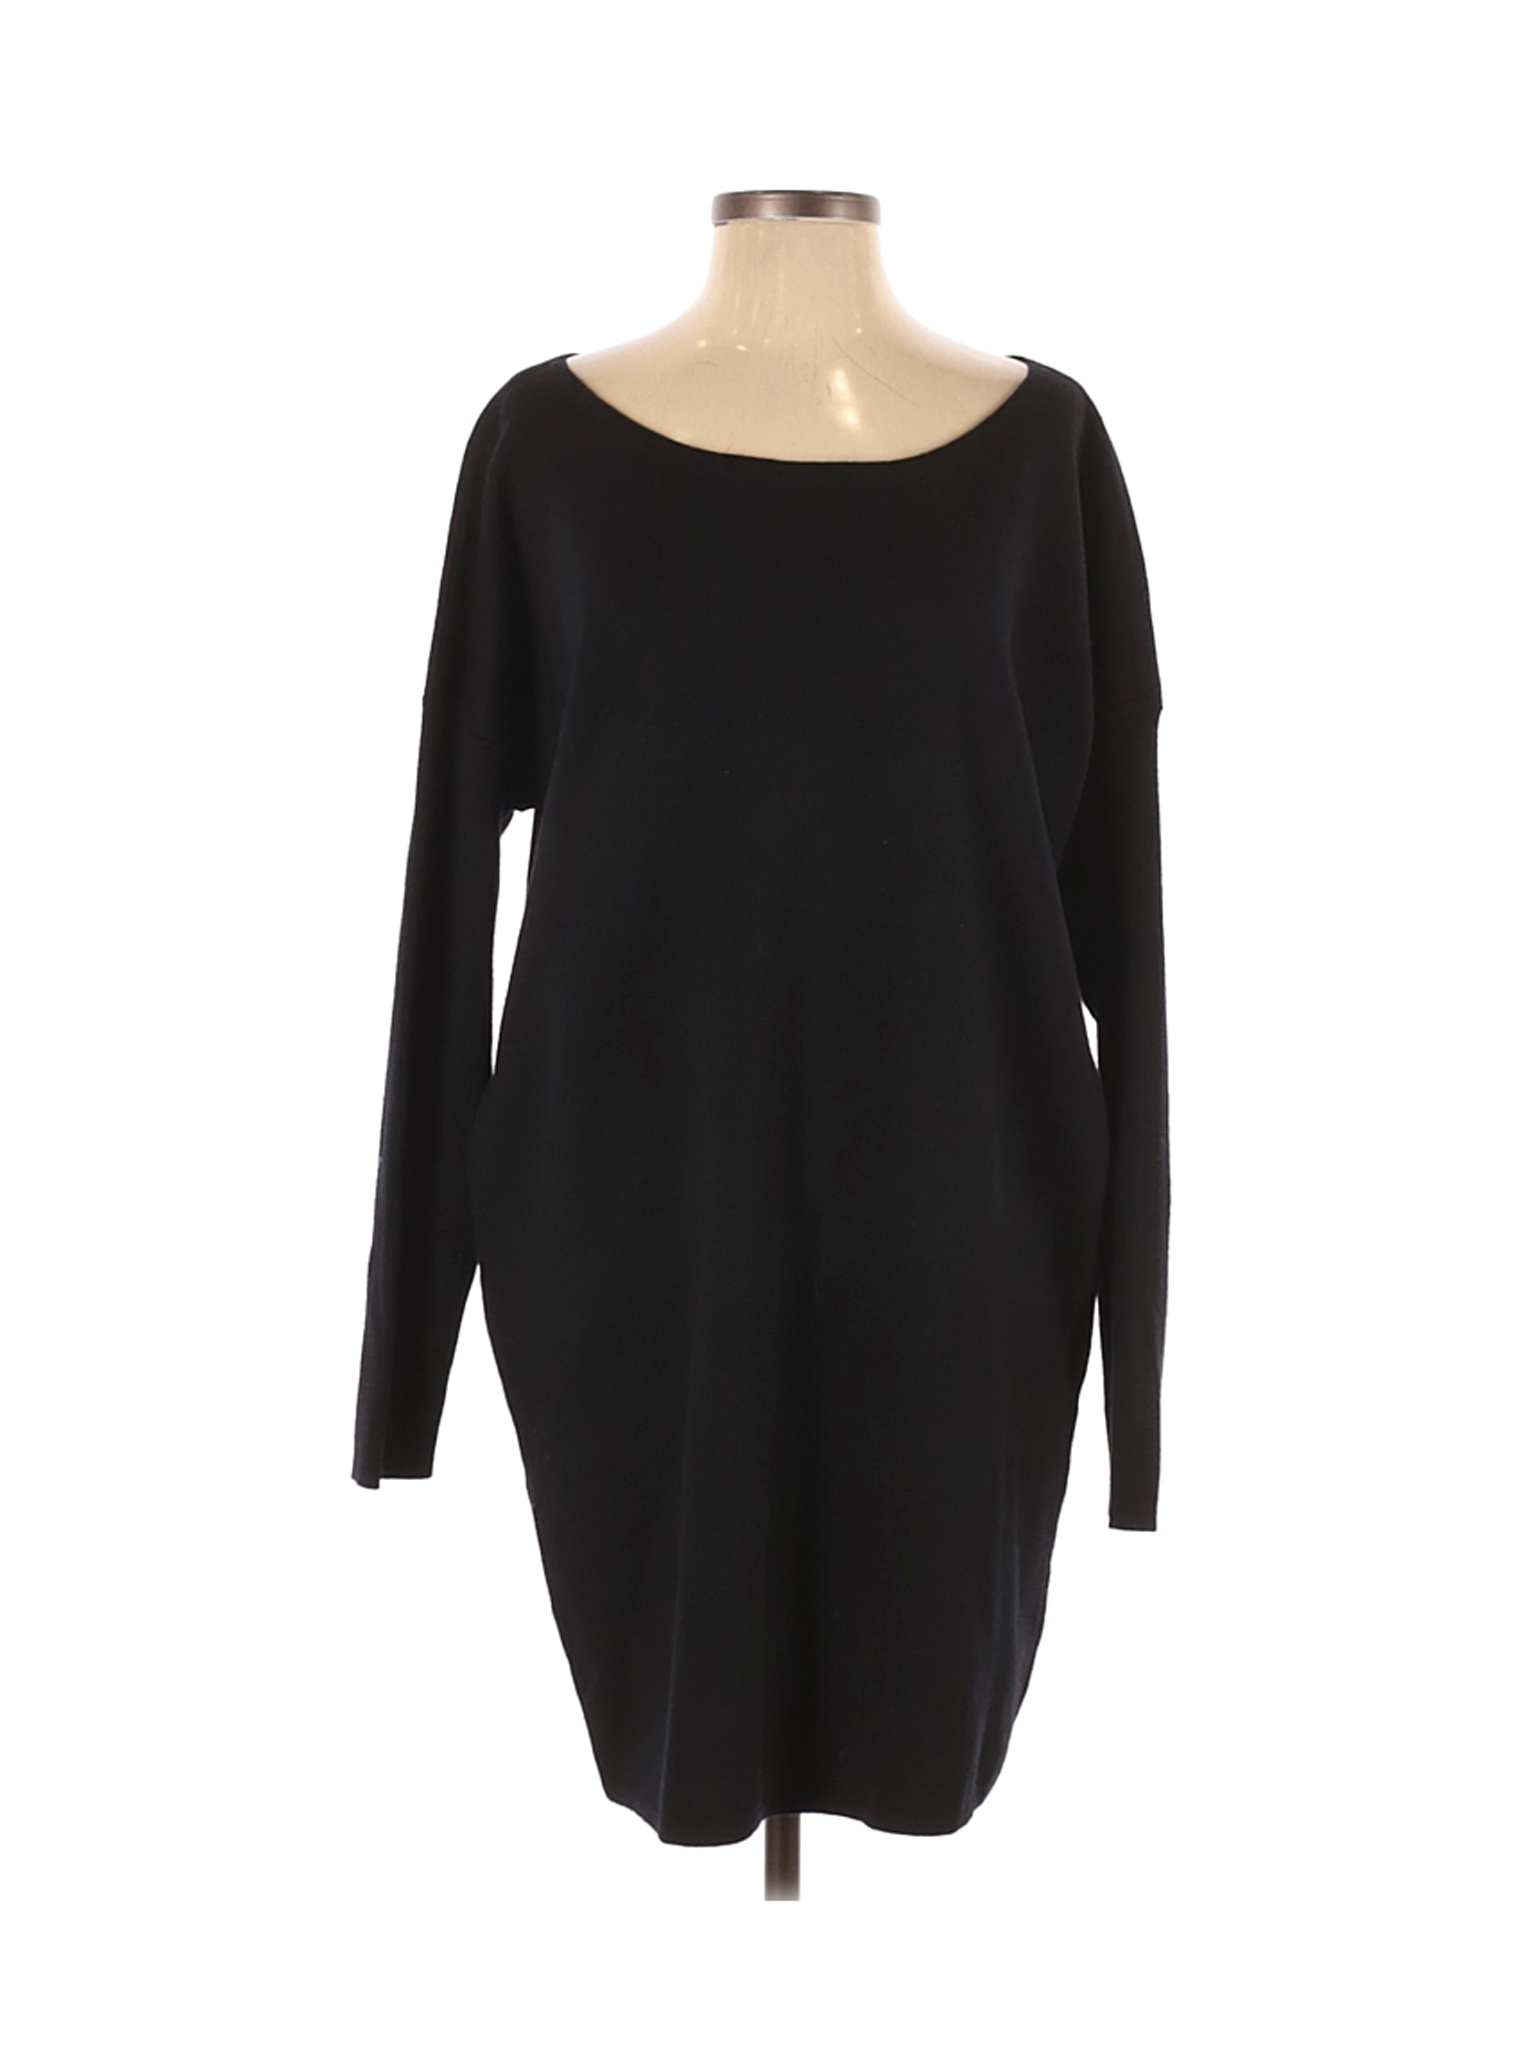 J.Crew Women Black Casual Dress L | eBay